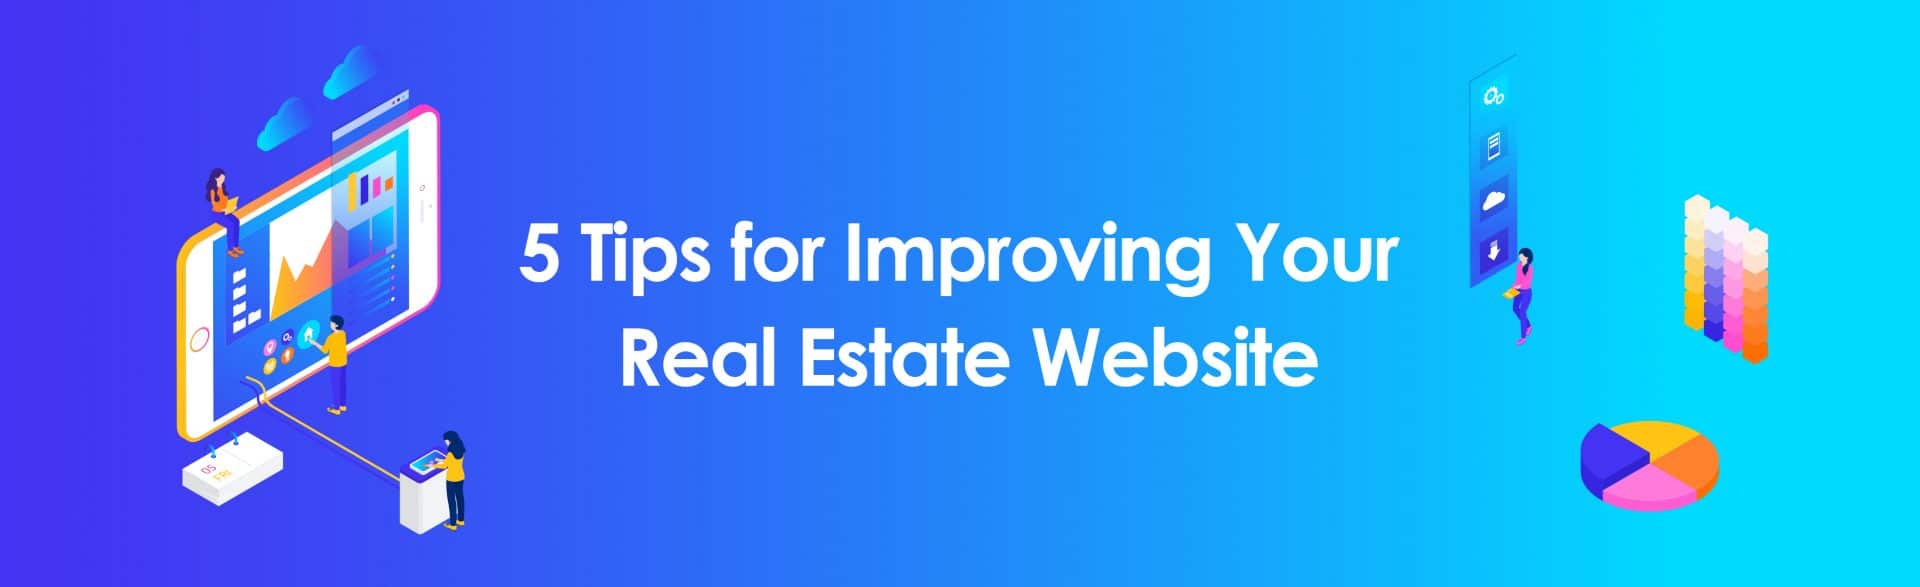 5 Tips for Improving Your Real Estate Website